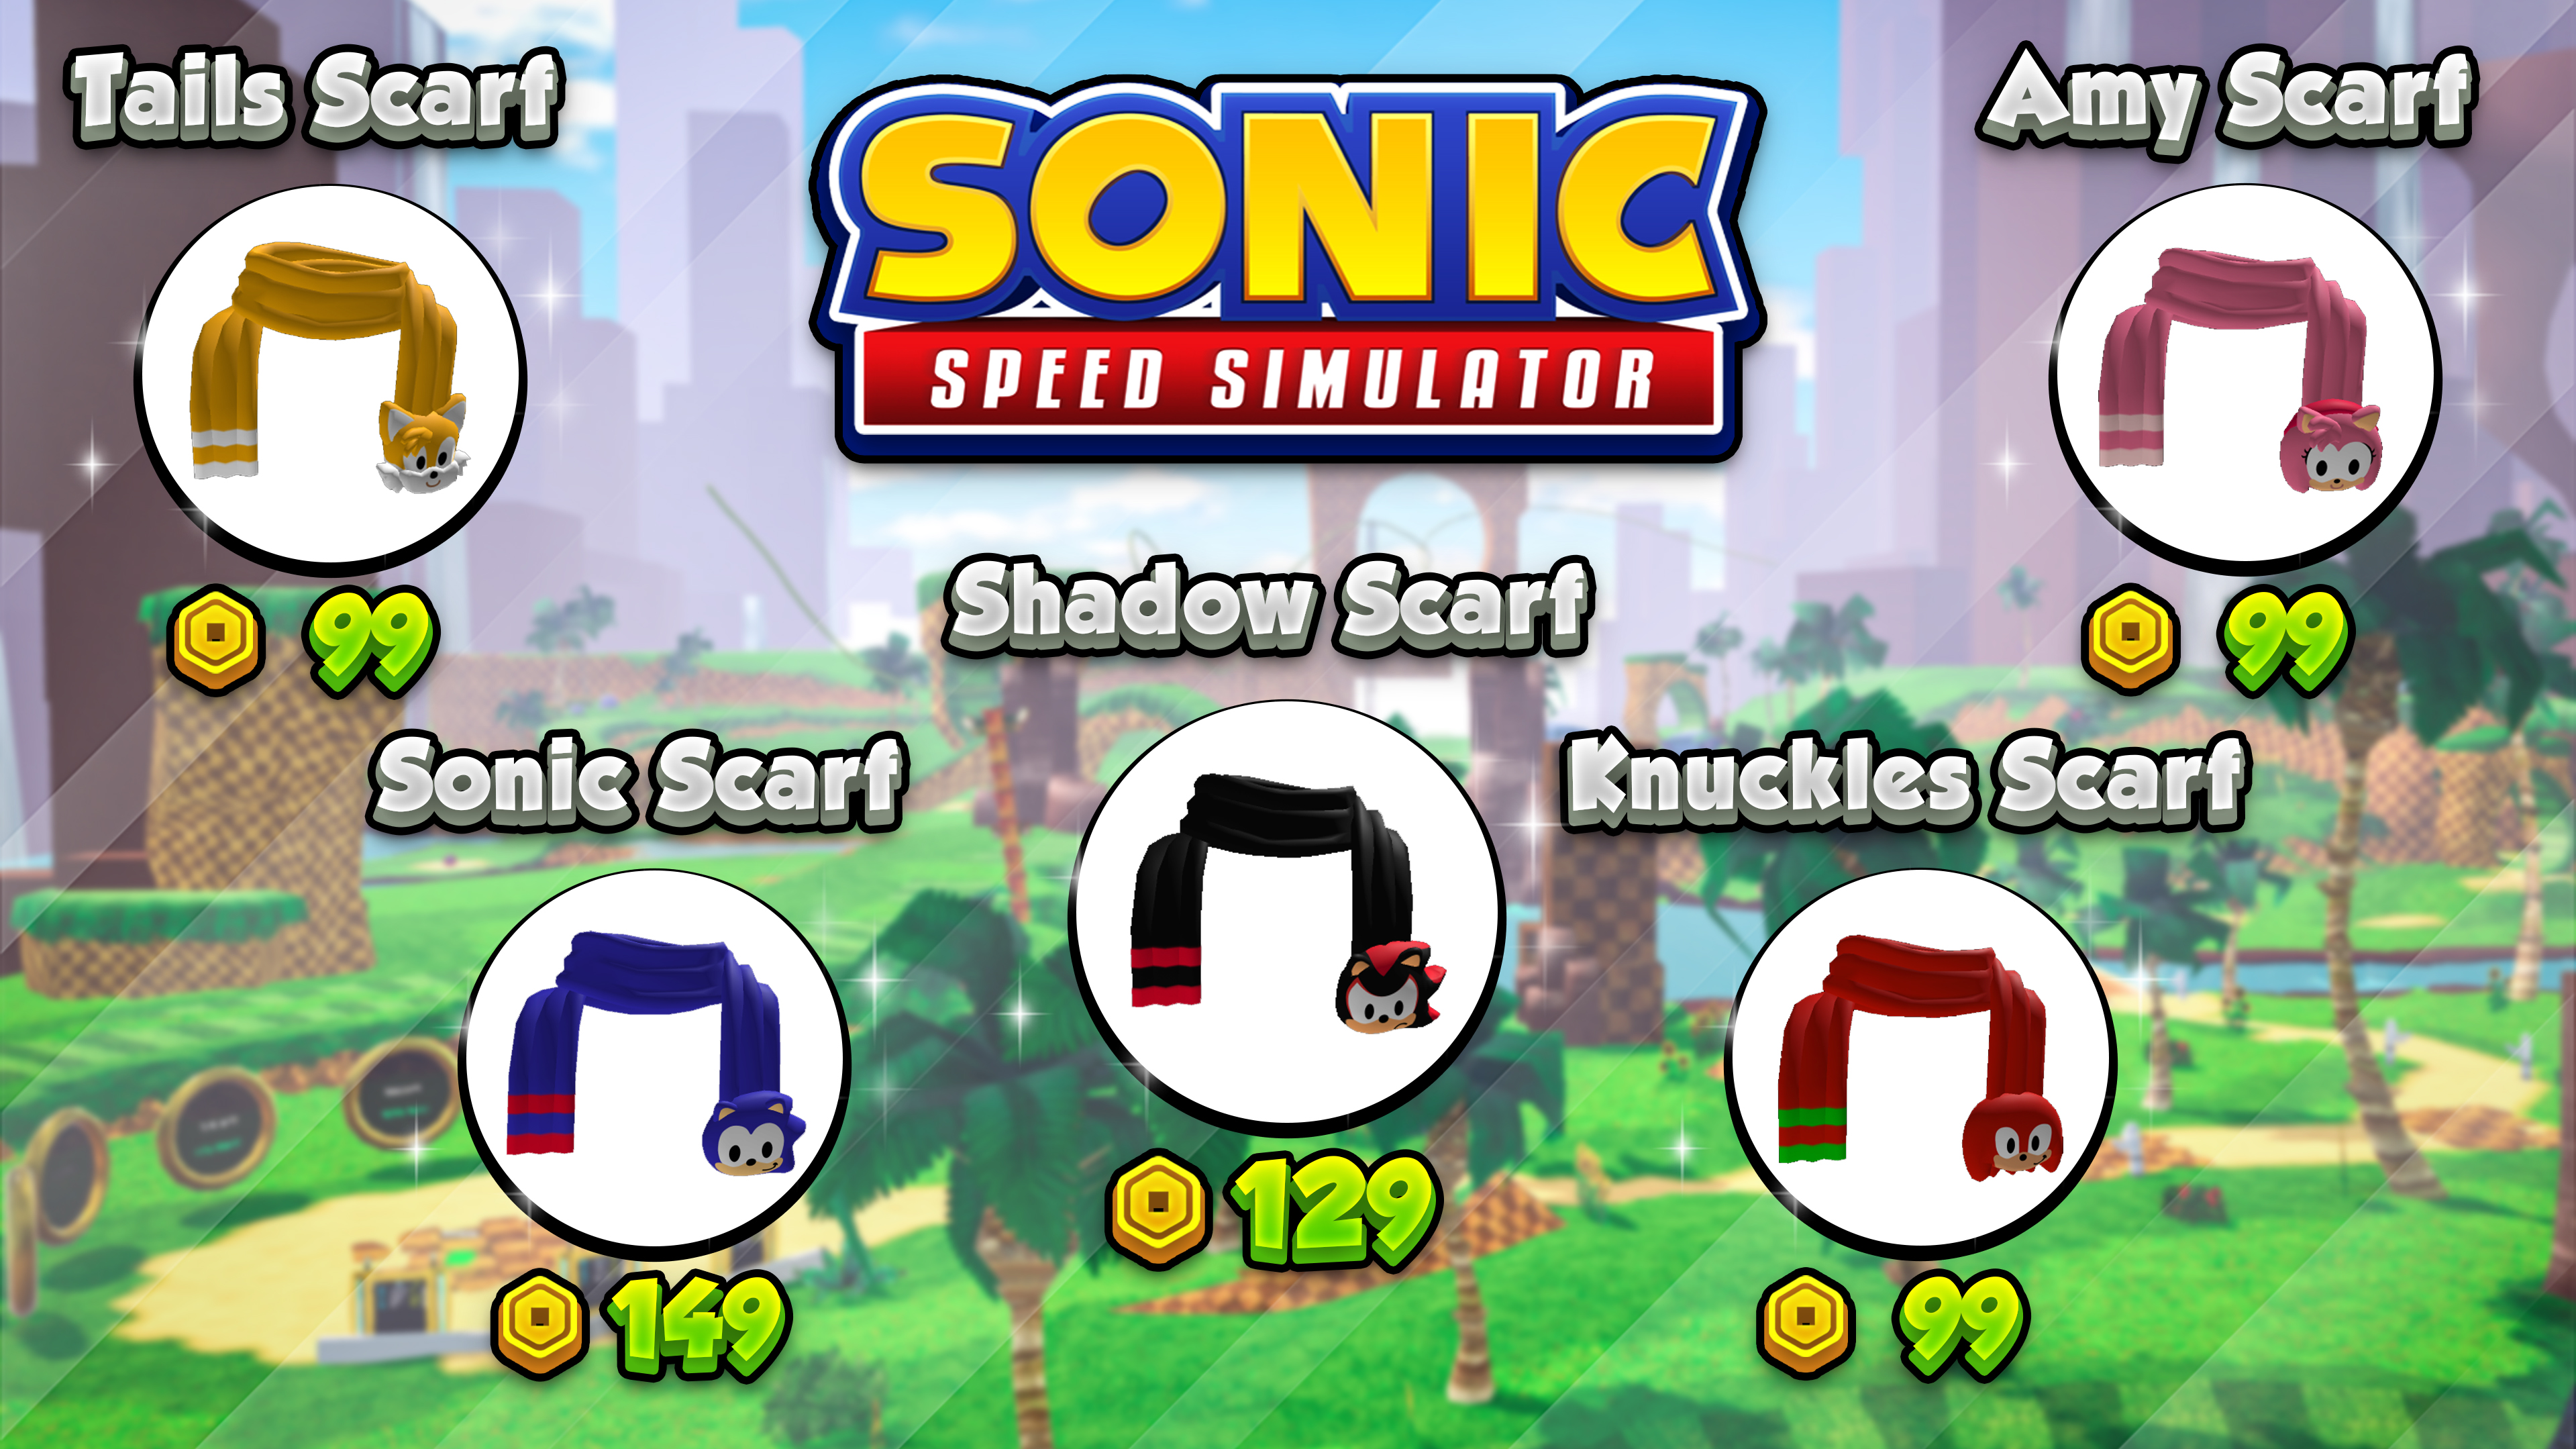 SUPER SONIC CHARACTER LOCATION? (Roblox Sonic Speed Simulator) 